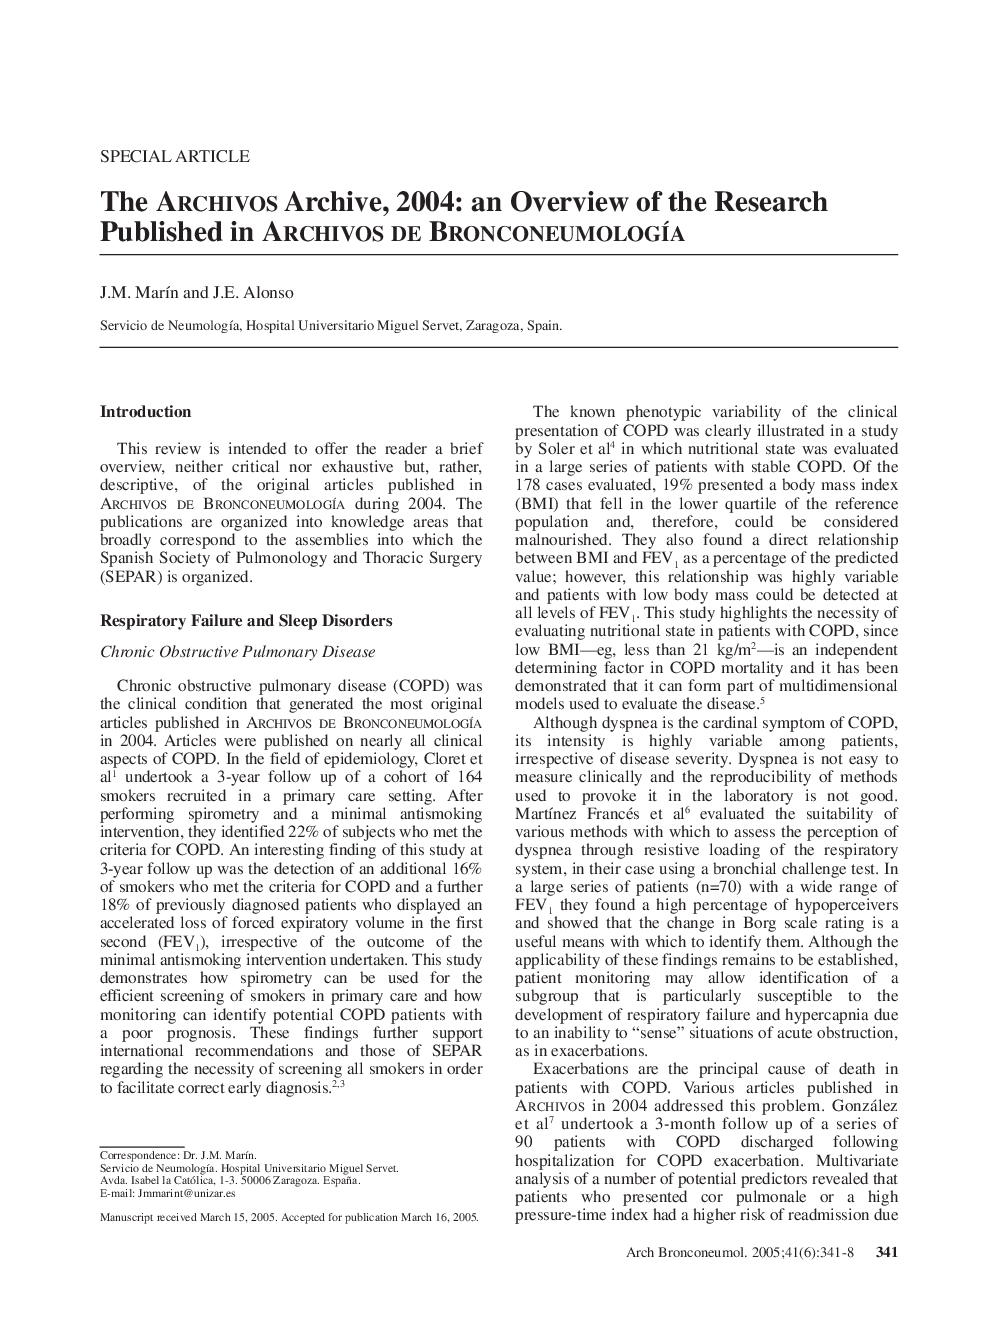 The Archivos Archive, 2004: an Overview of the Research Published in Archivos De BronconeumologÃ­a